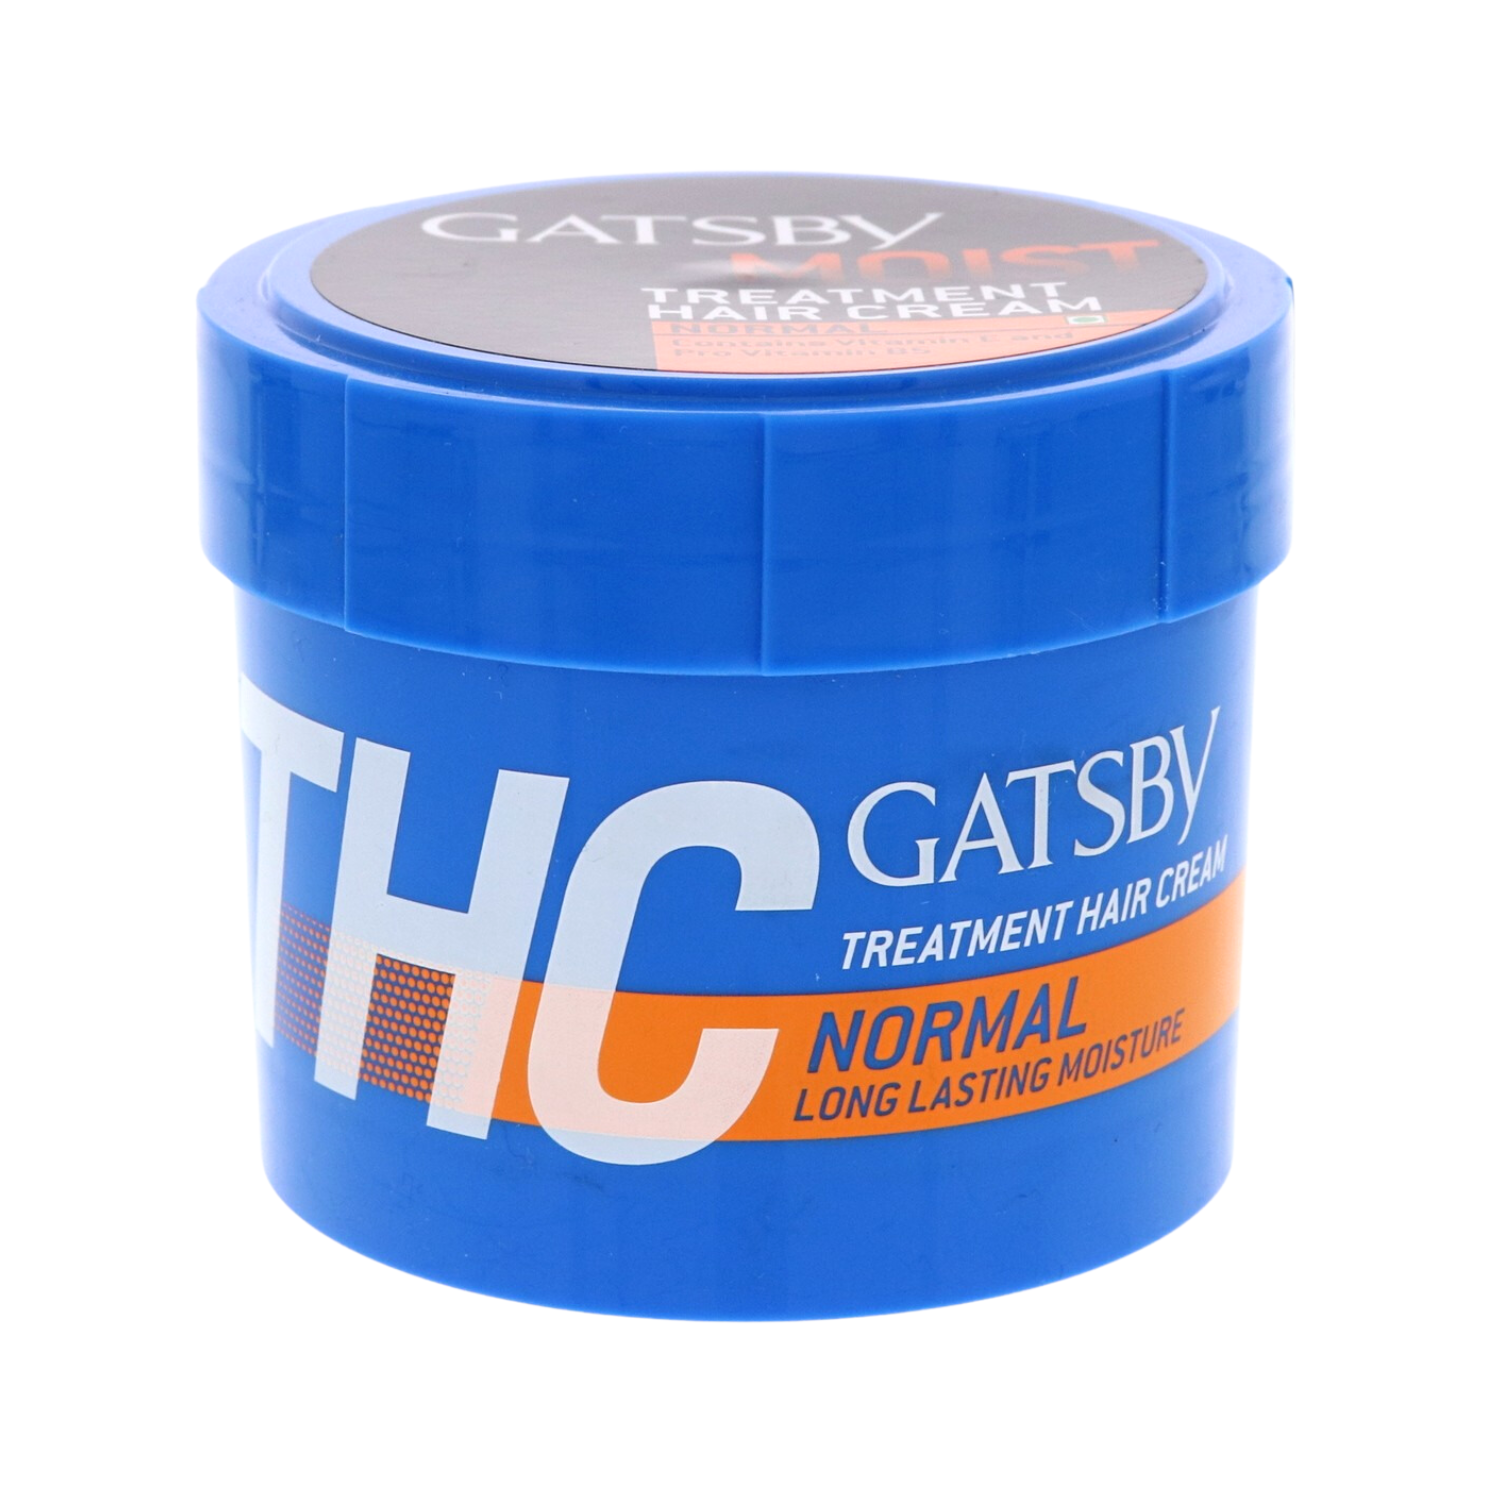 gatsby-care-treatment-hair-cream-normal-long-lasting-moisture-250g